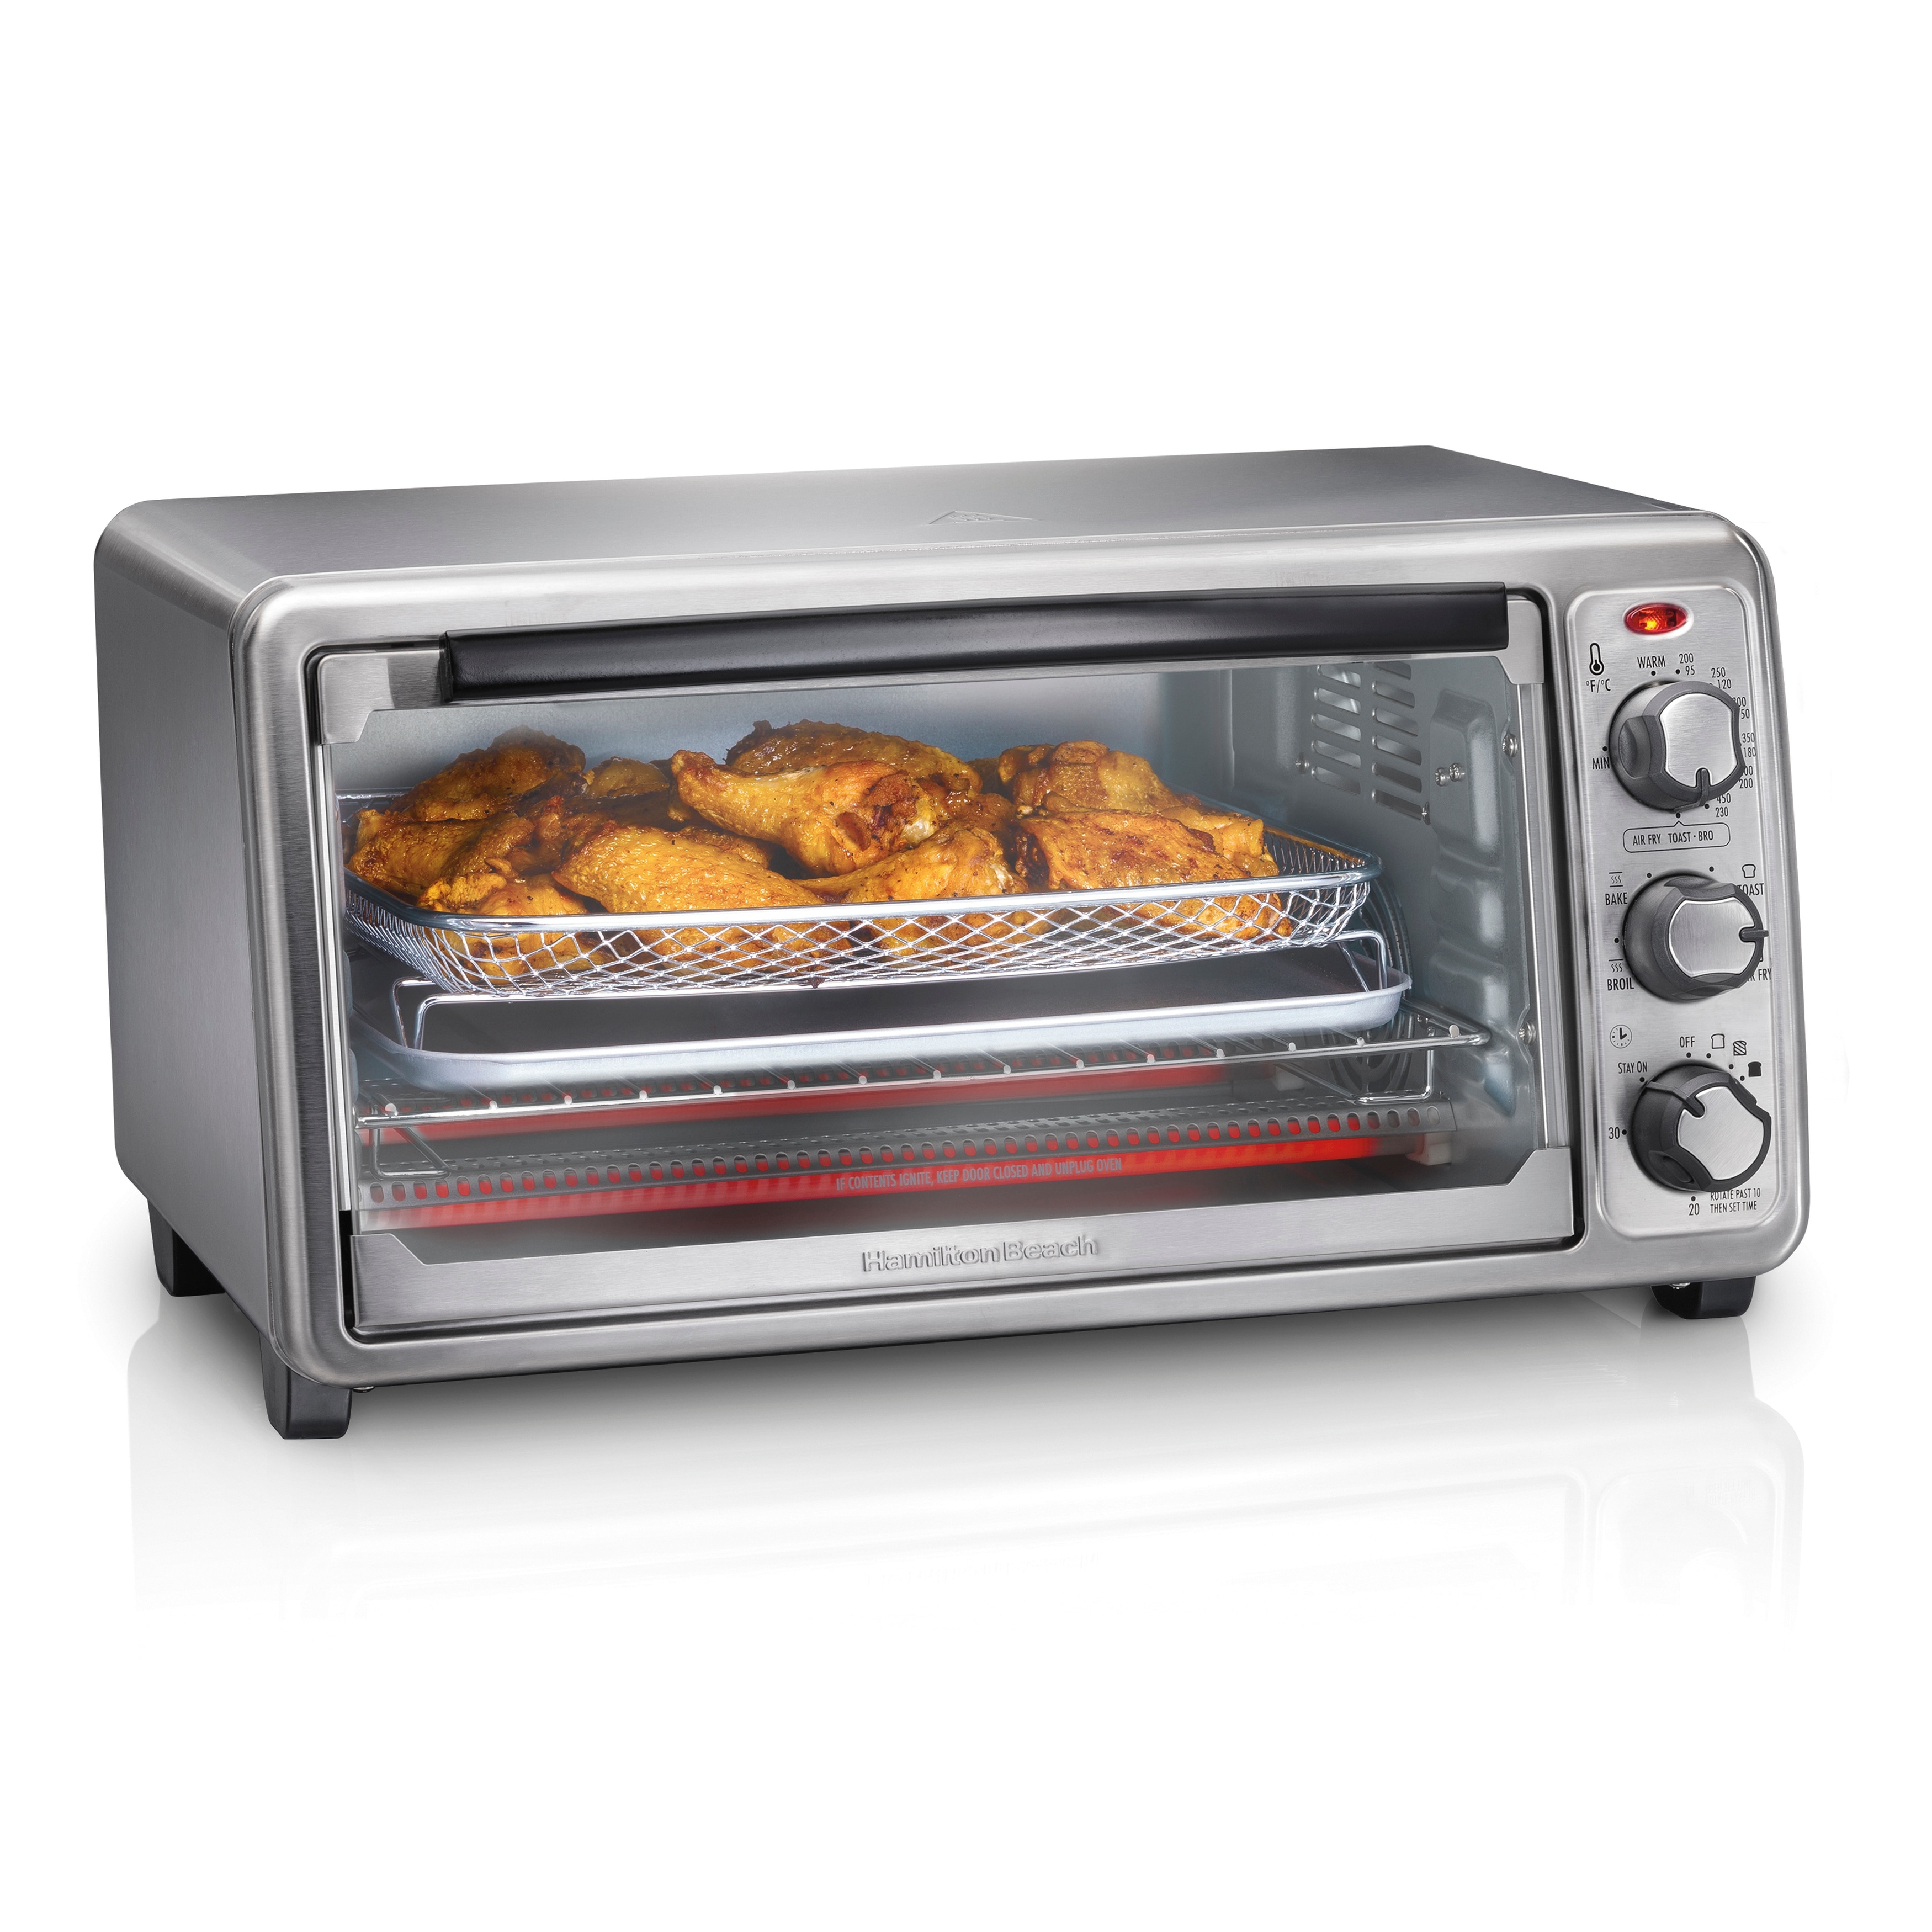 Hamilton Beach - 6 Slice Digital Air Fryer Toaster Oven - Black